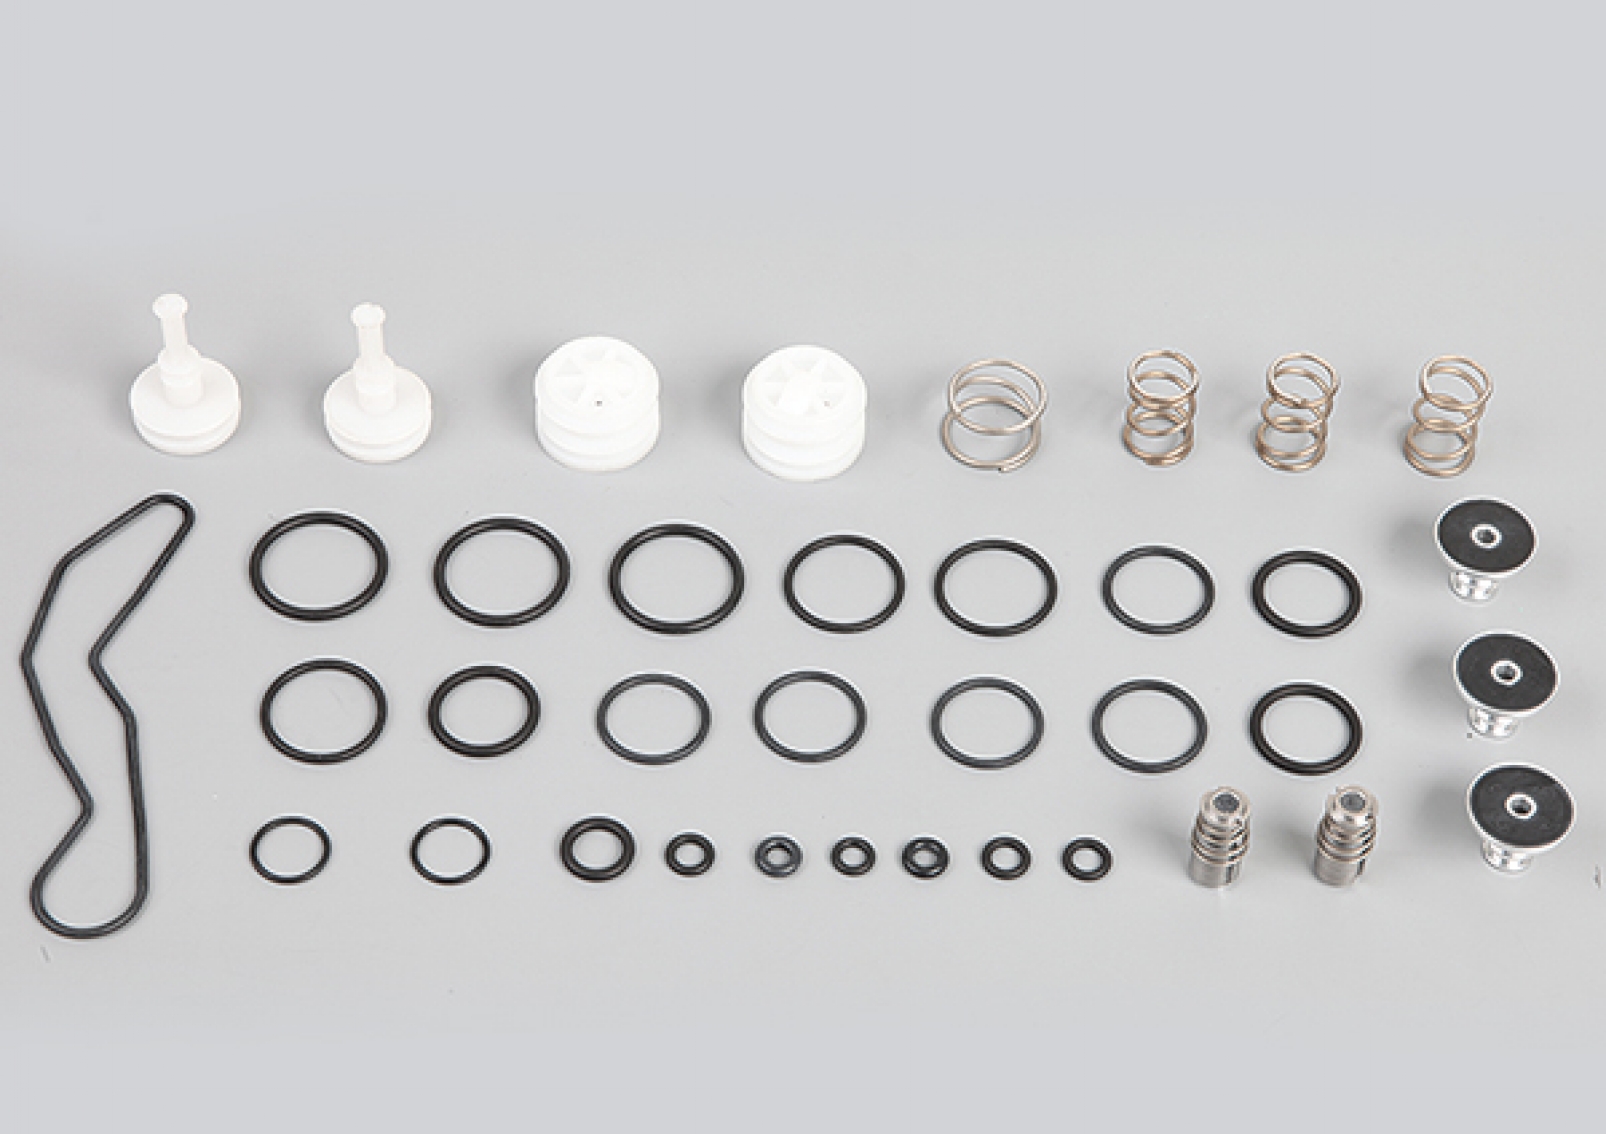 Ecas Valve Repair Kit, 0 501 100 031 Used for Volvo
Ecas Valve Unit
Oem: 0 501 100 031